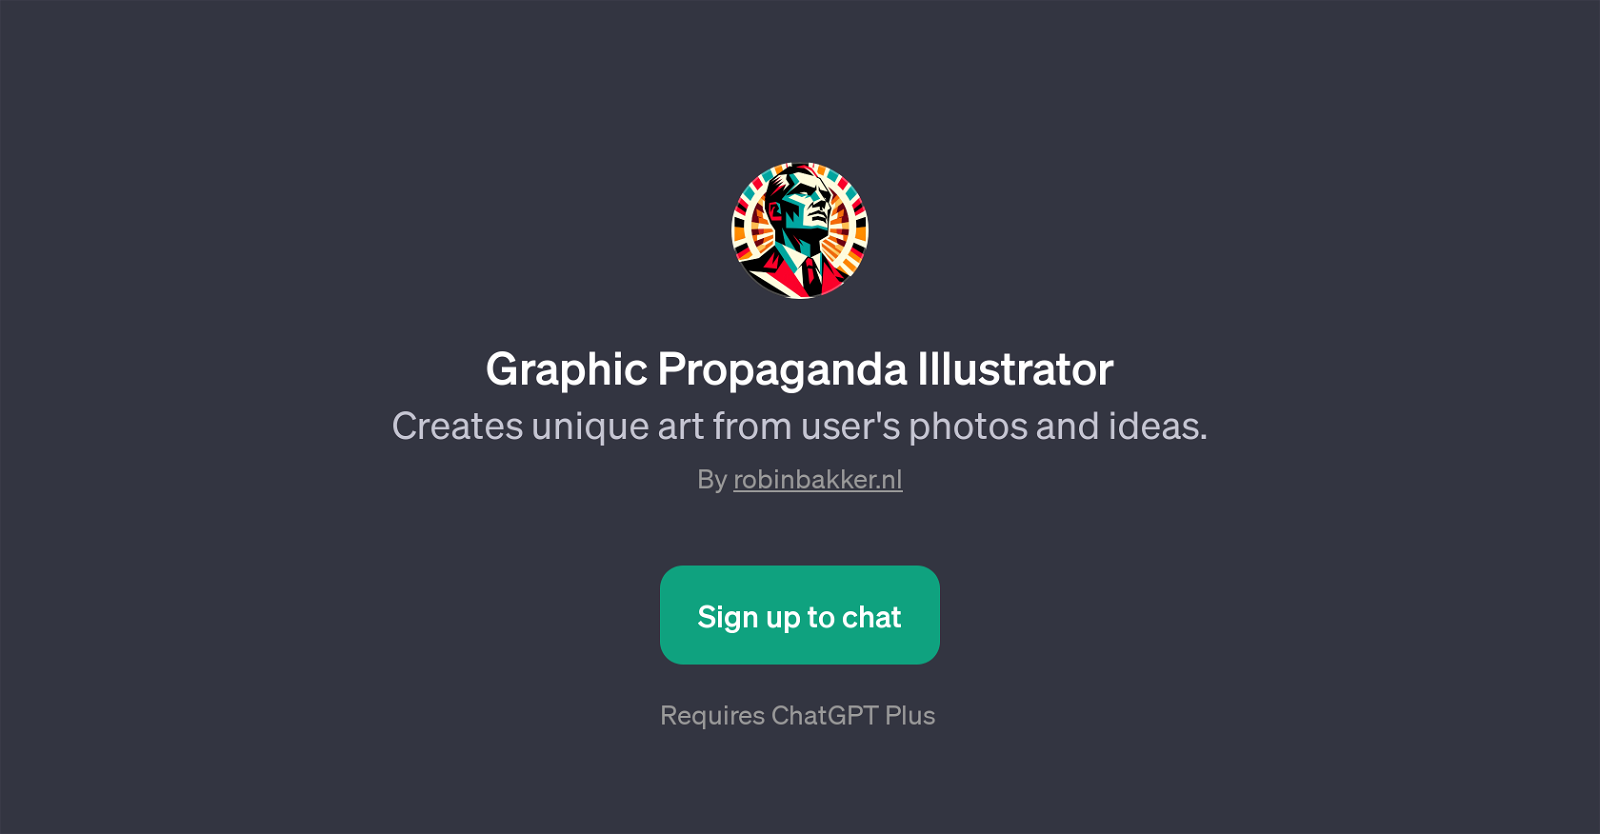 Graphic Propaganda Illustrator website